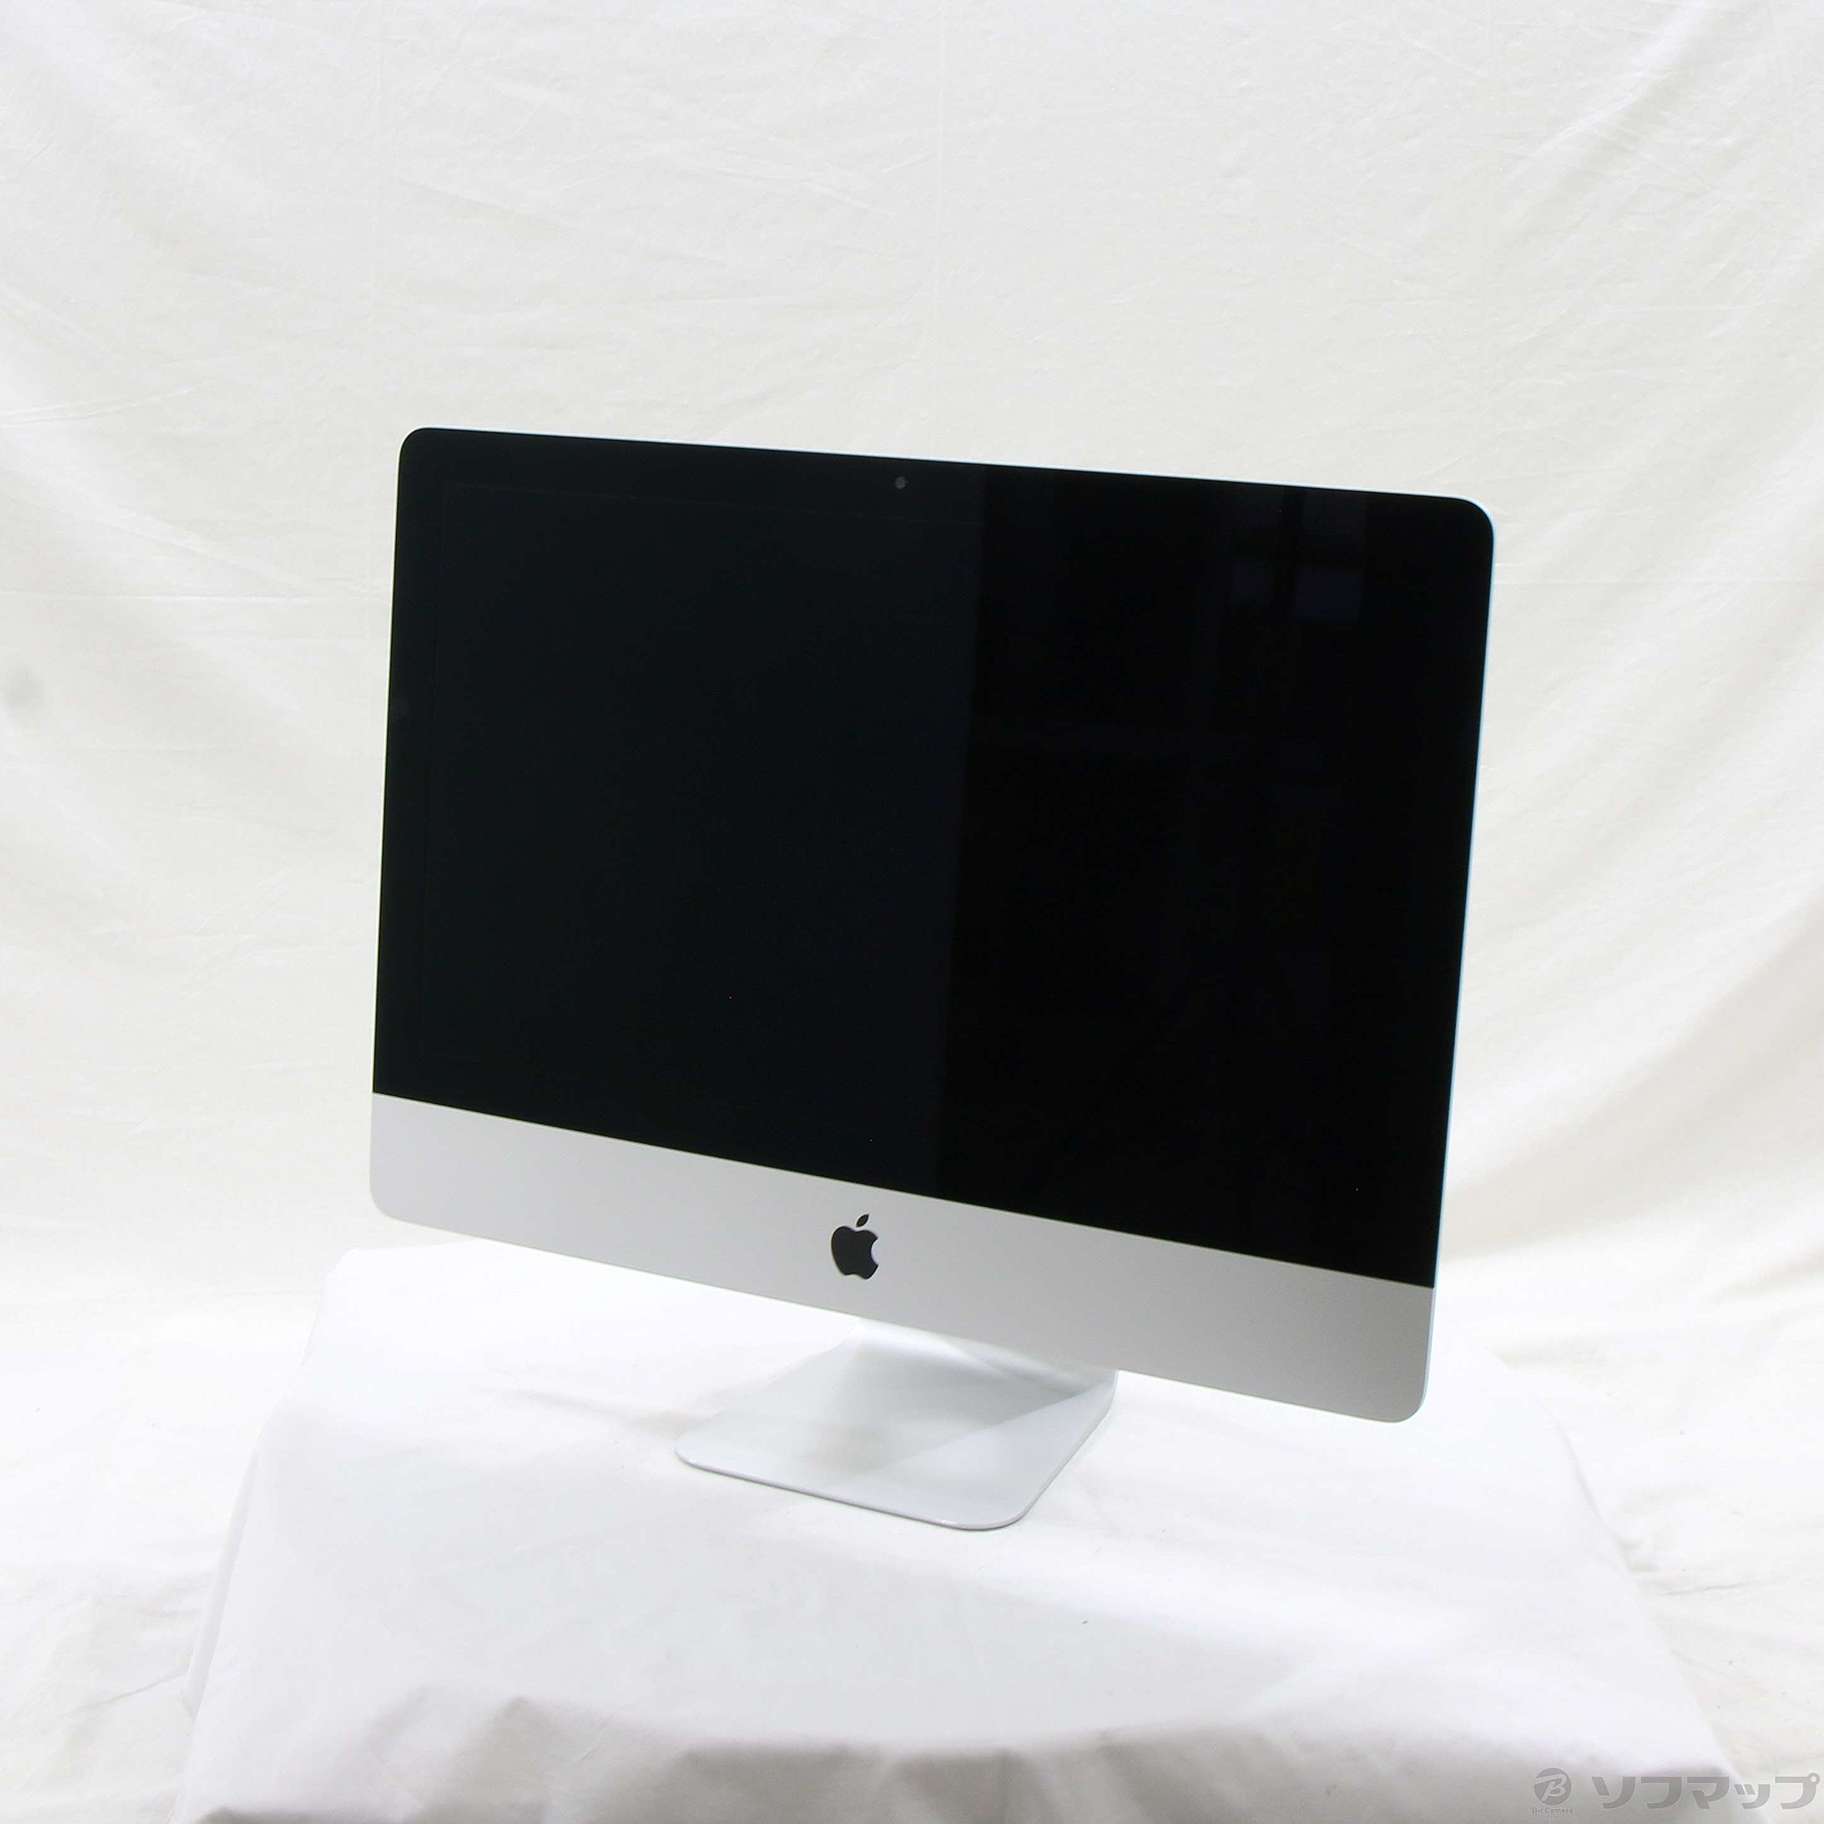 中古】iMac 21.5-inch Late 2012 MD093J／A Core_i5 2.7GHz 8GB HDD1TB